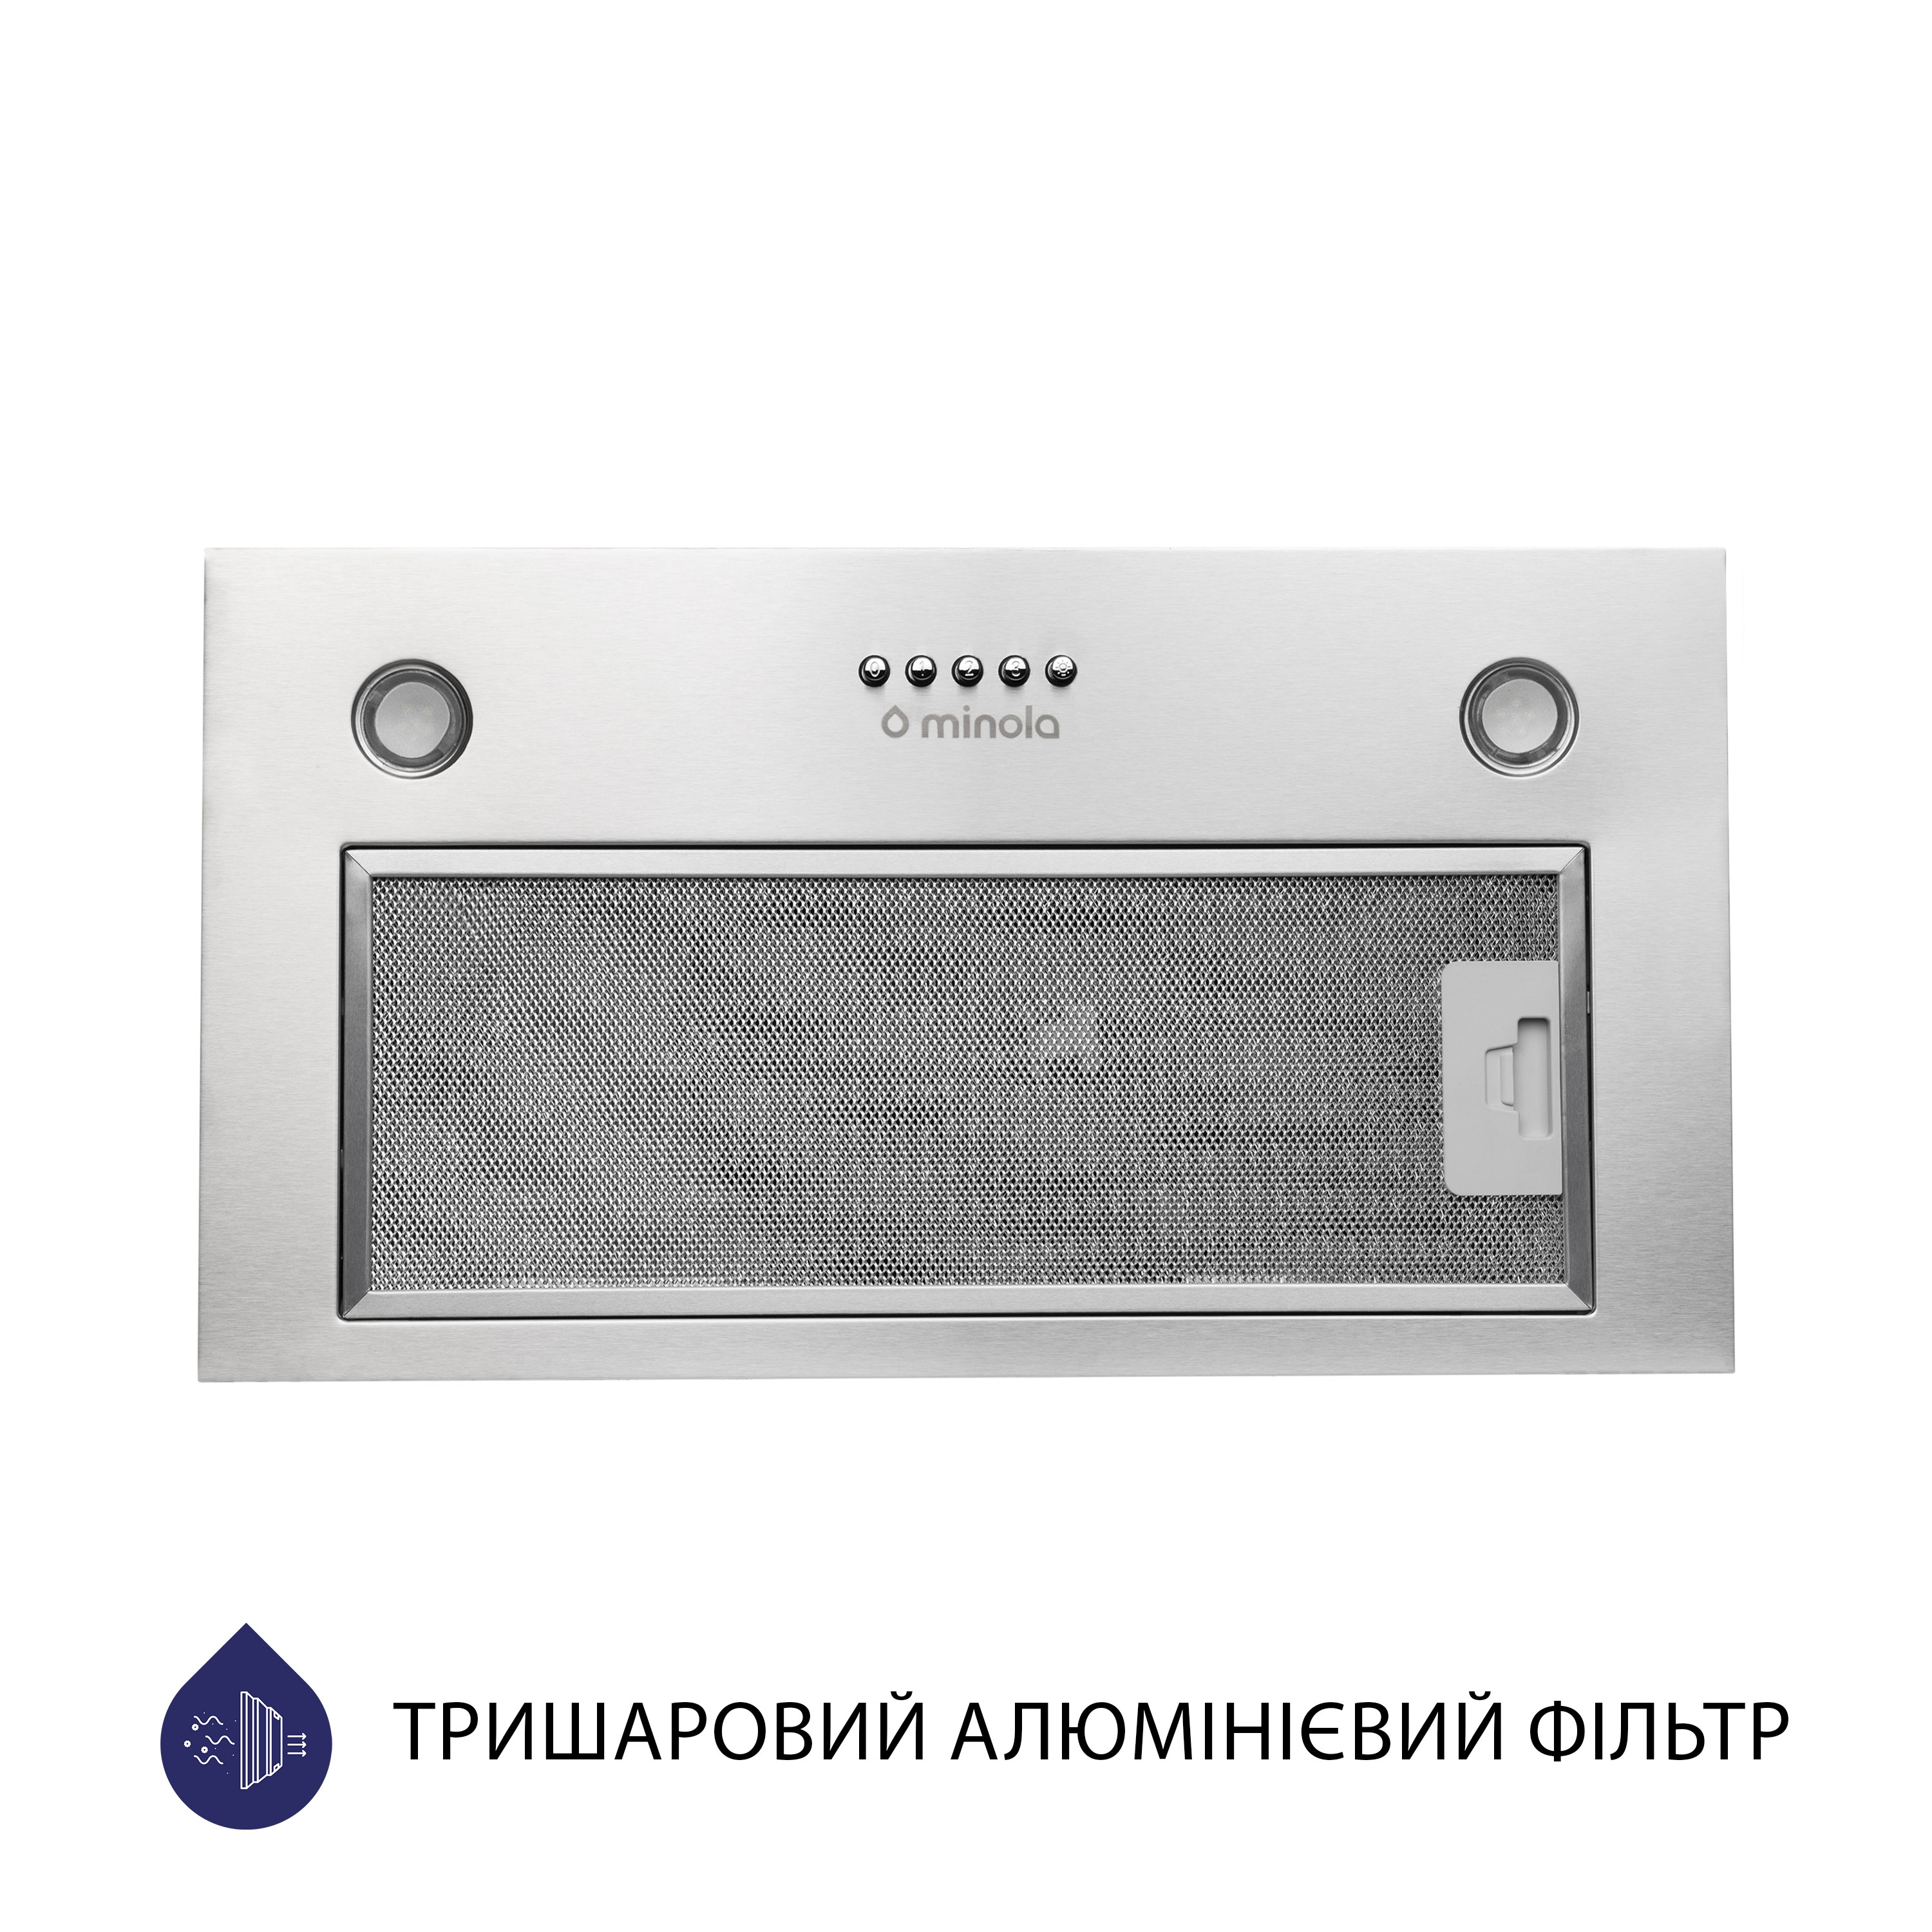 Витяжка кухонная полновстраиваемая Minola HBI 5627 I 1000 LED цена 4079.00 грн - фотография 2